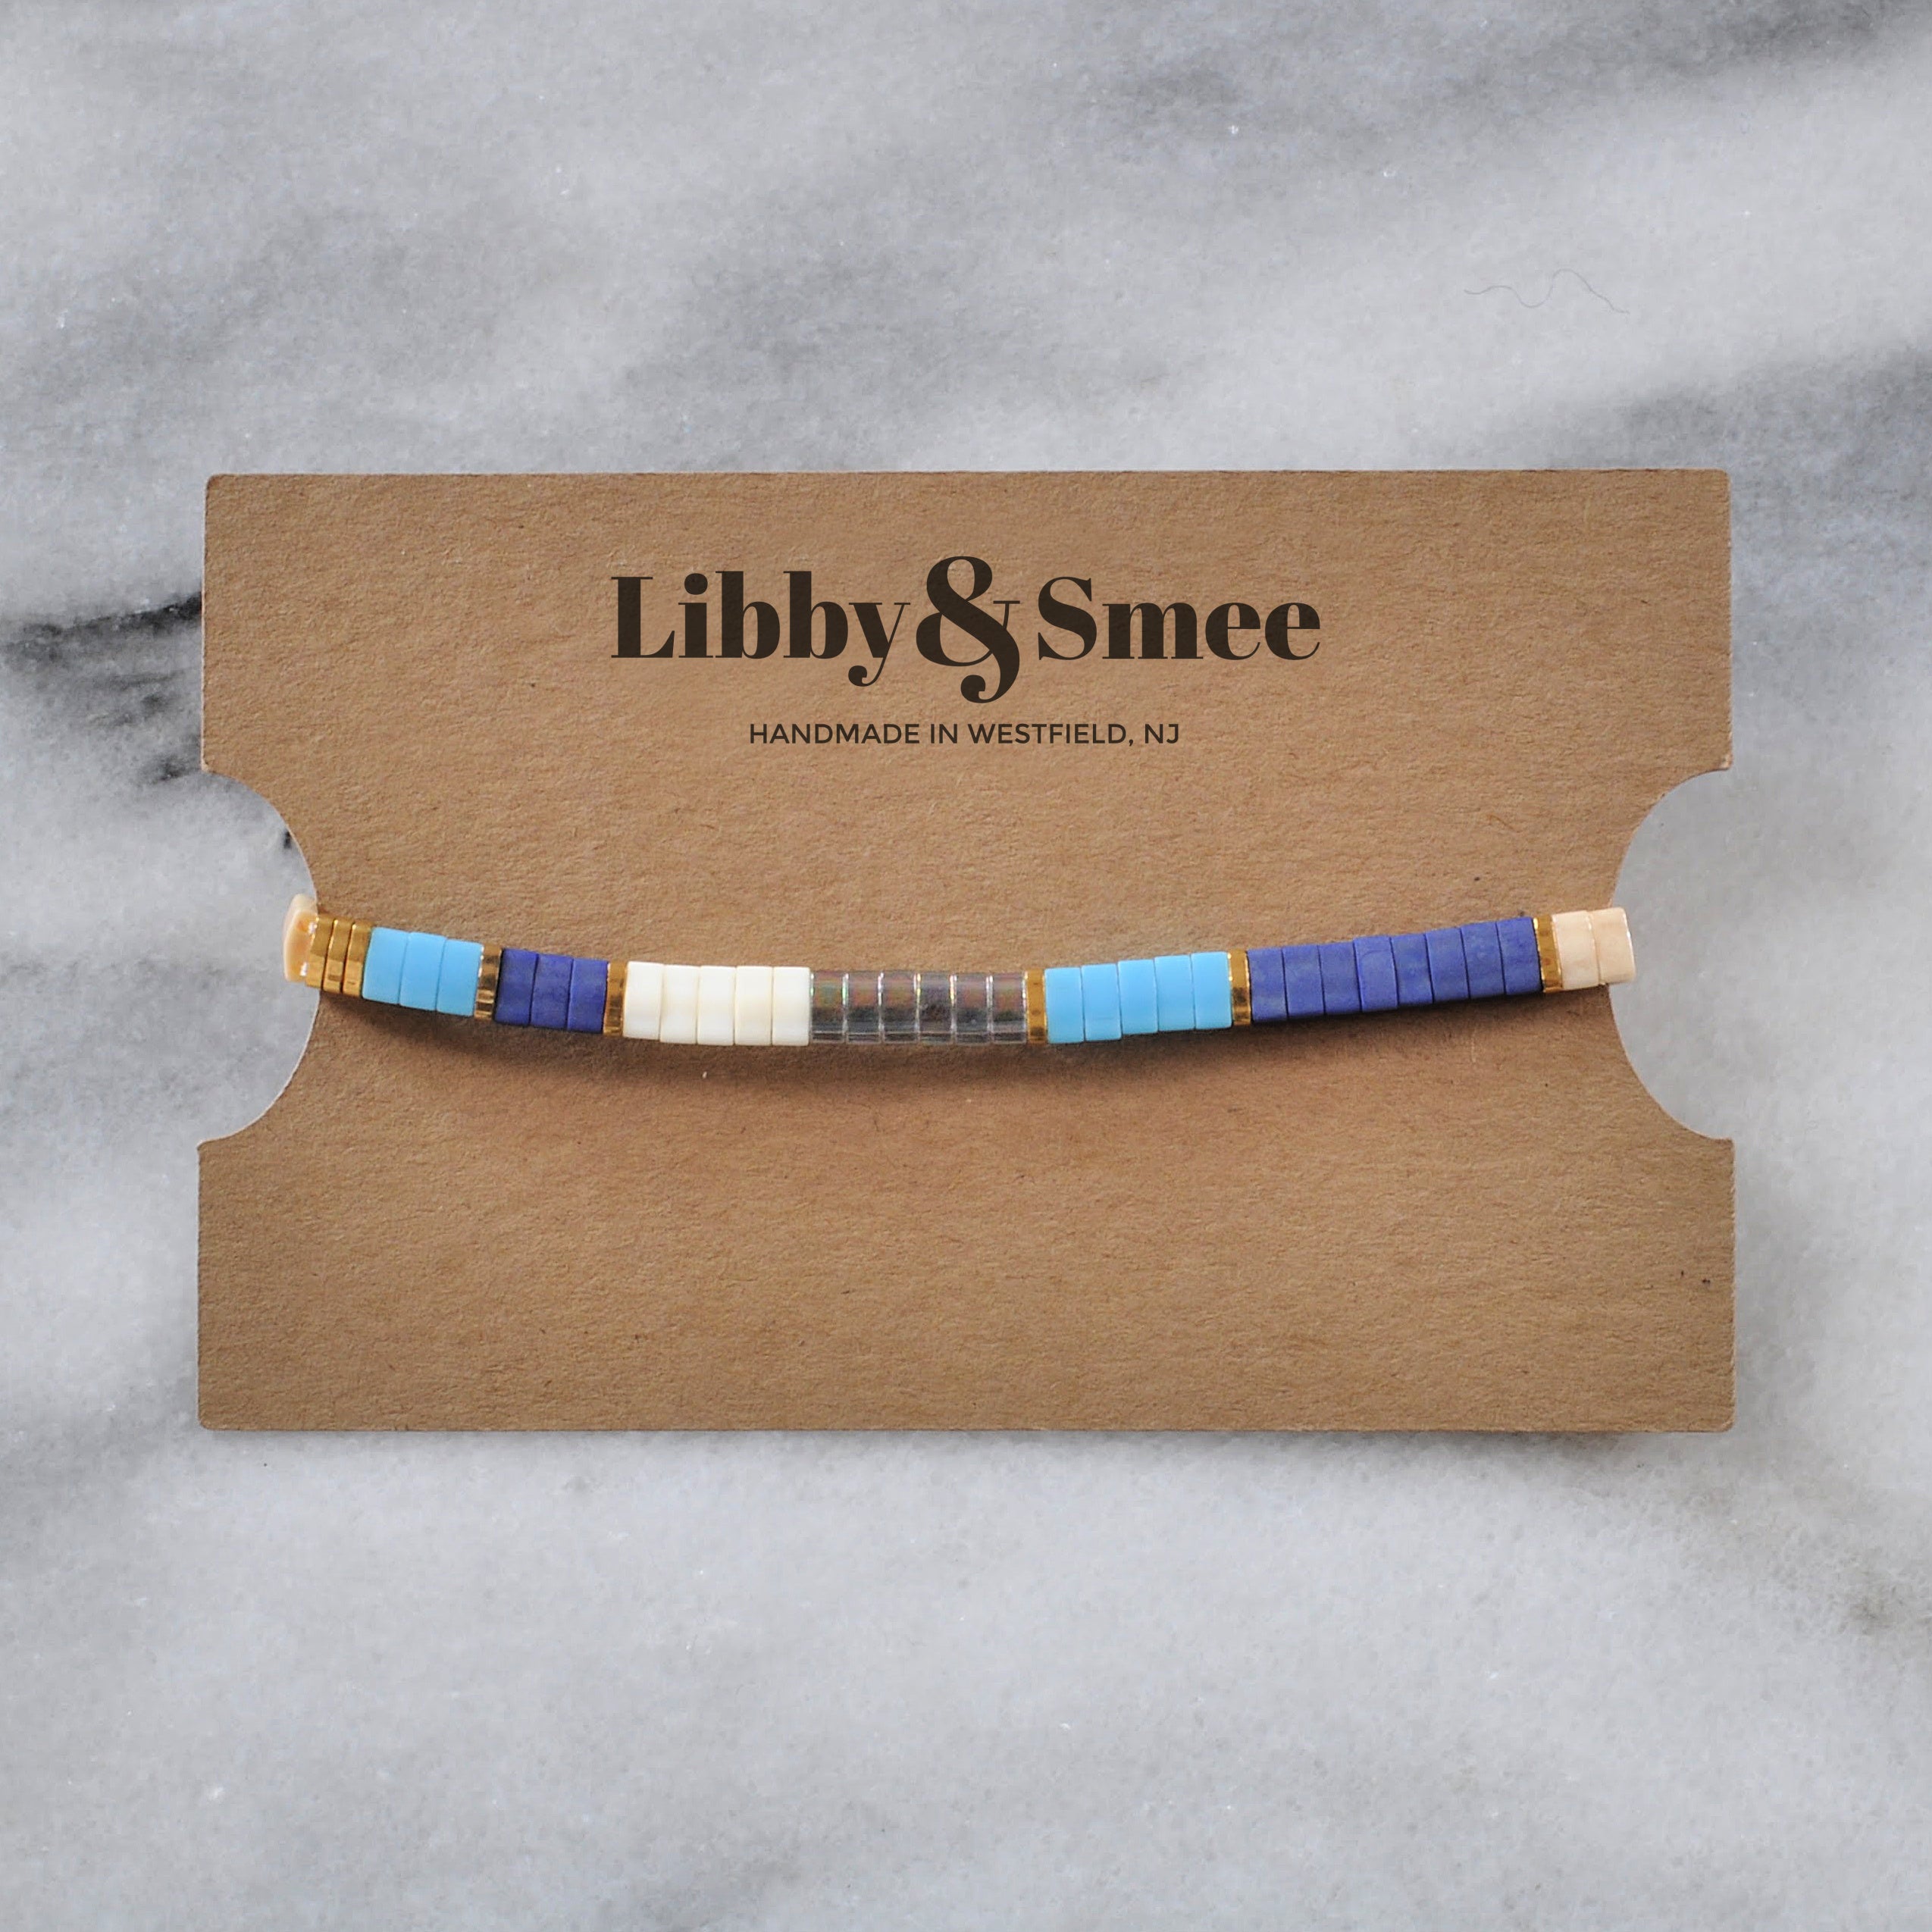 Libby & Smee stretch tile bracelet in Sky Colorblock